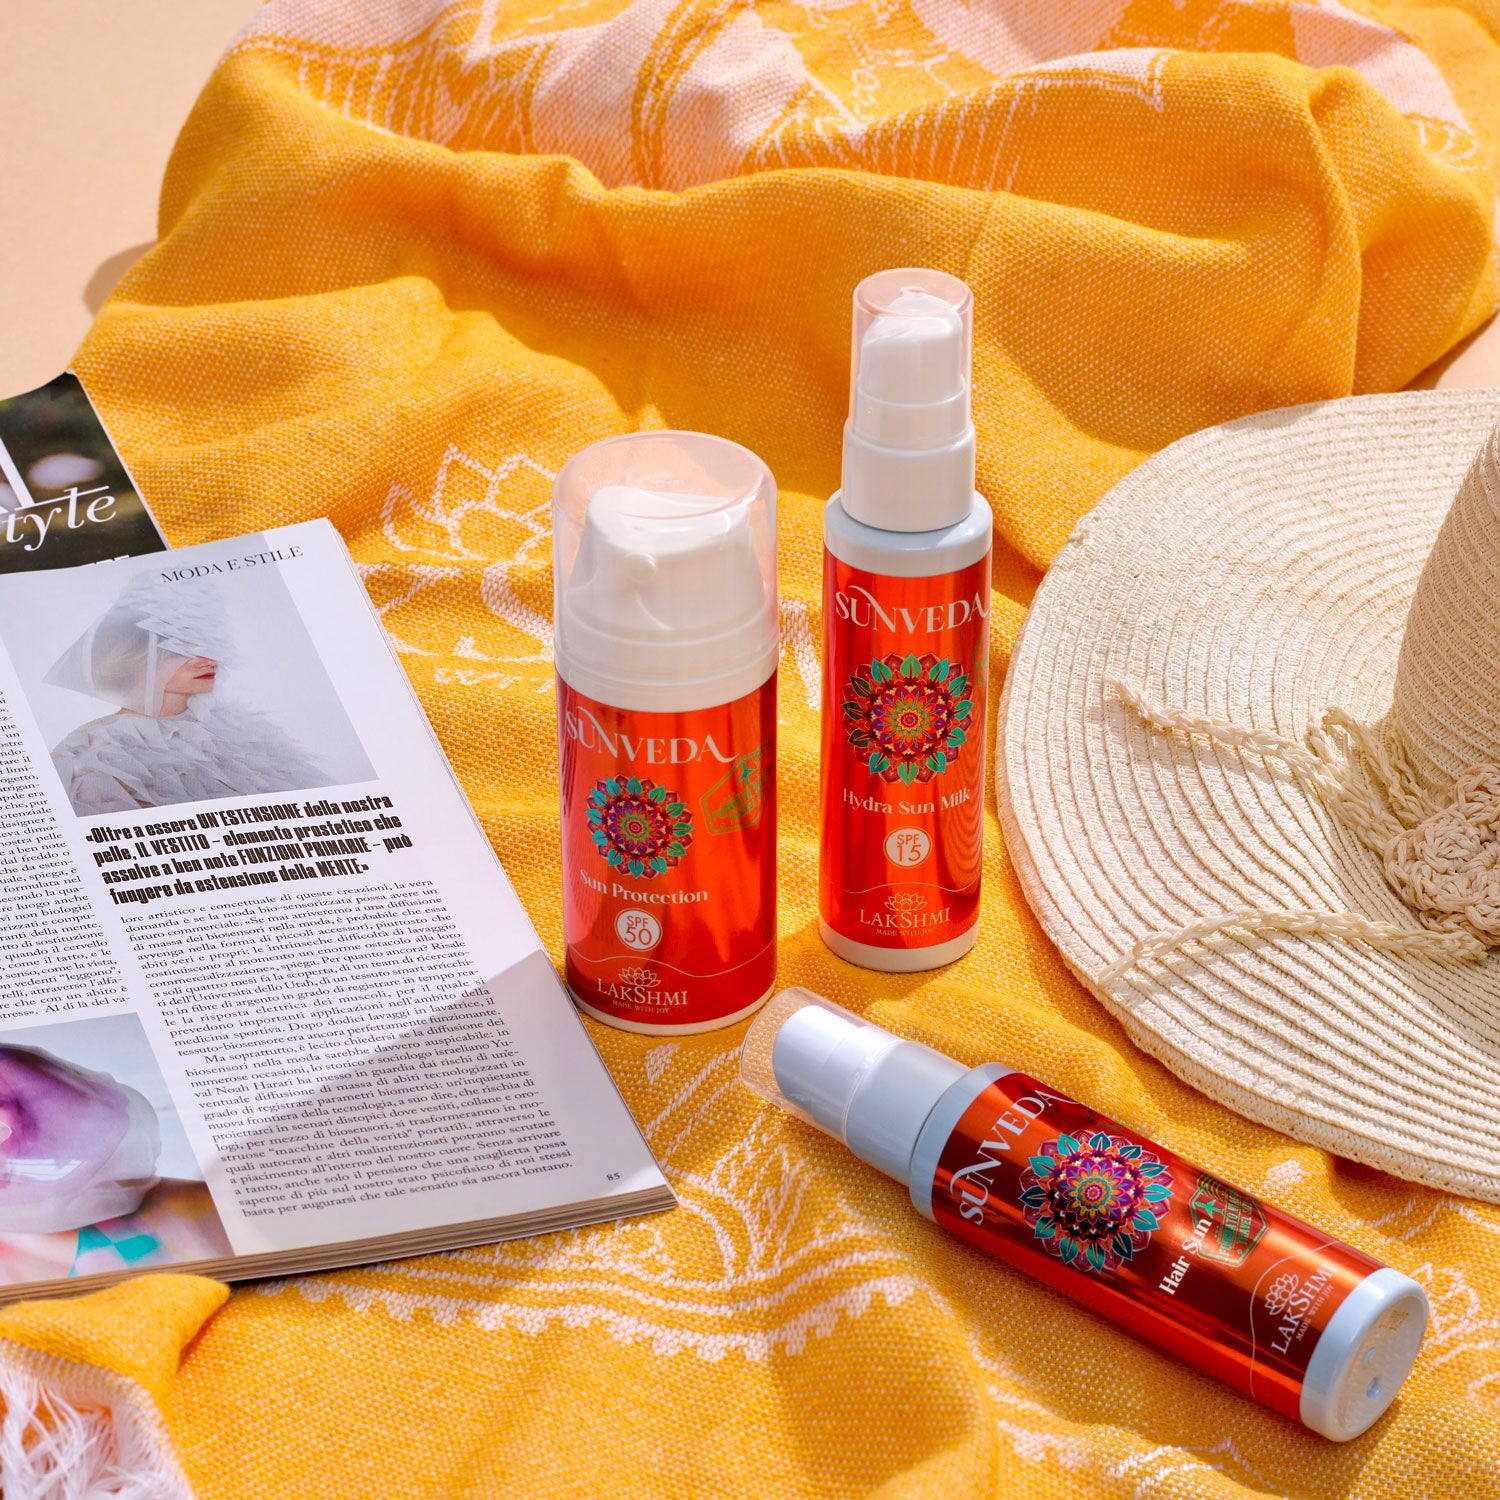 Lakshmi's organic sunscreens: the Sunveda ritual